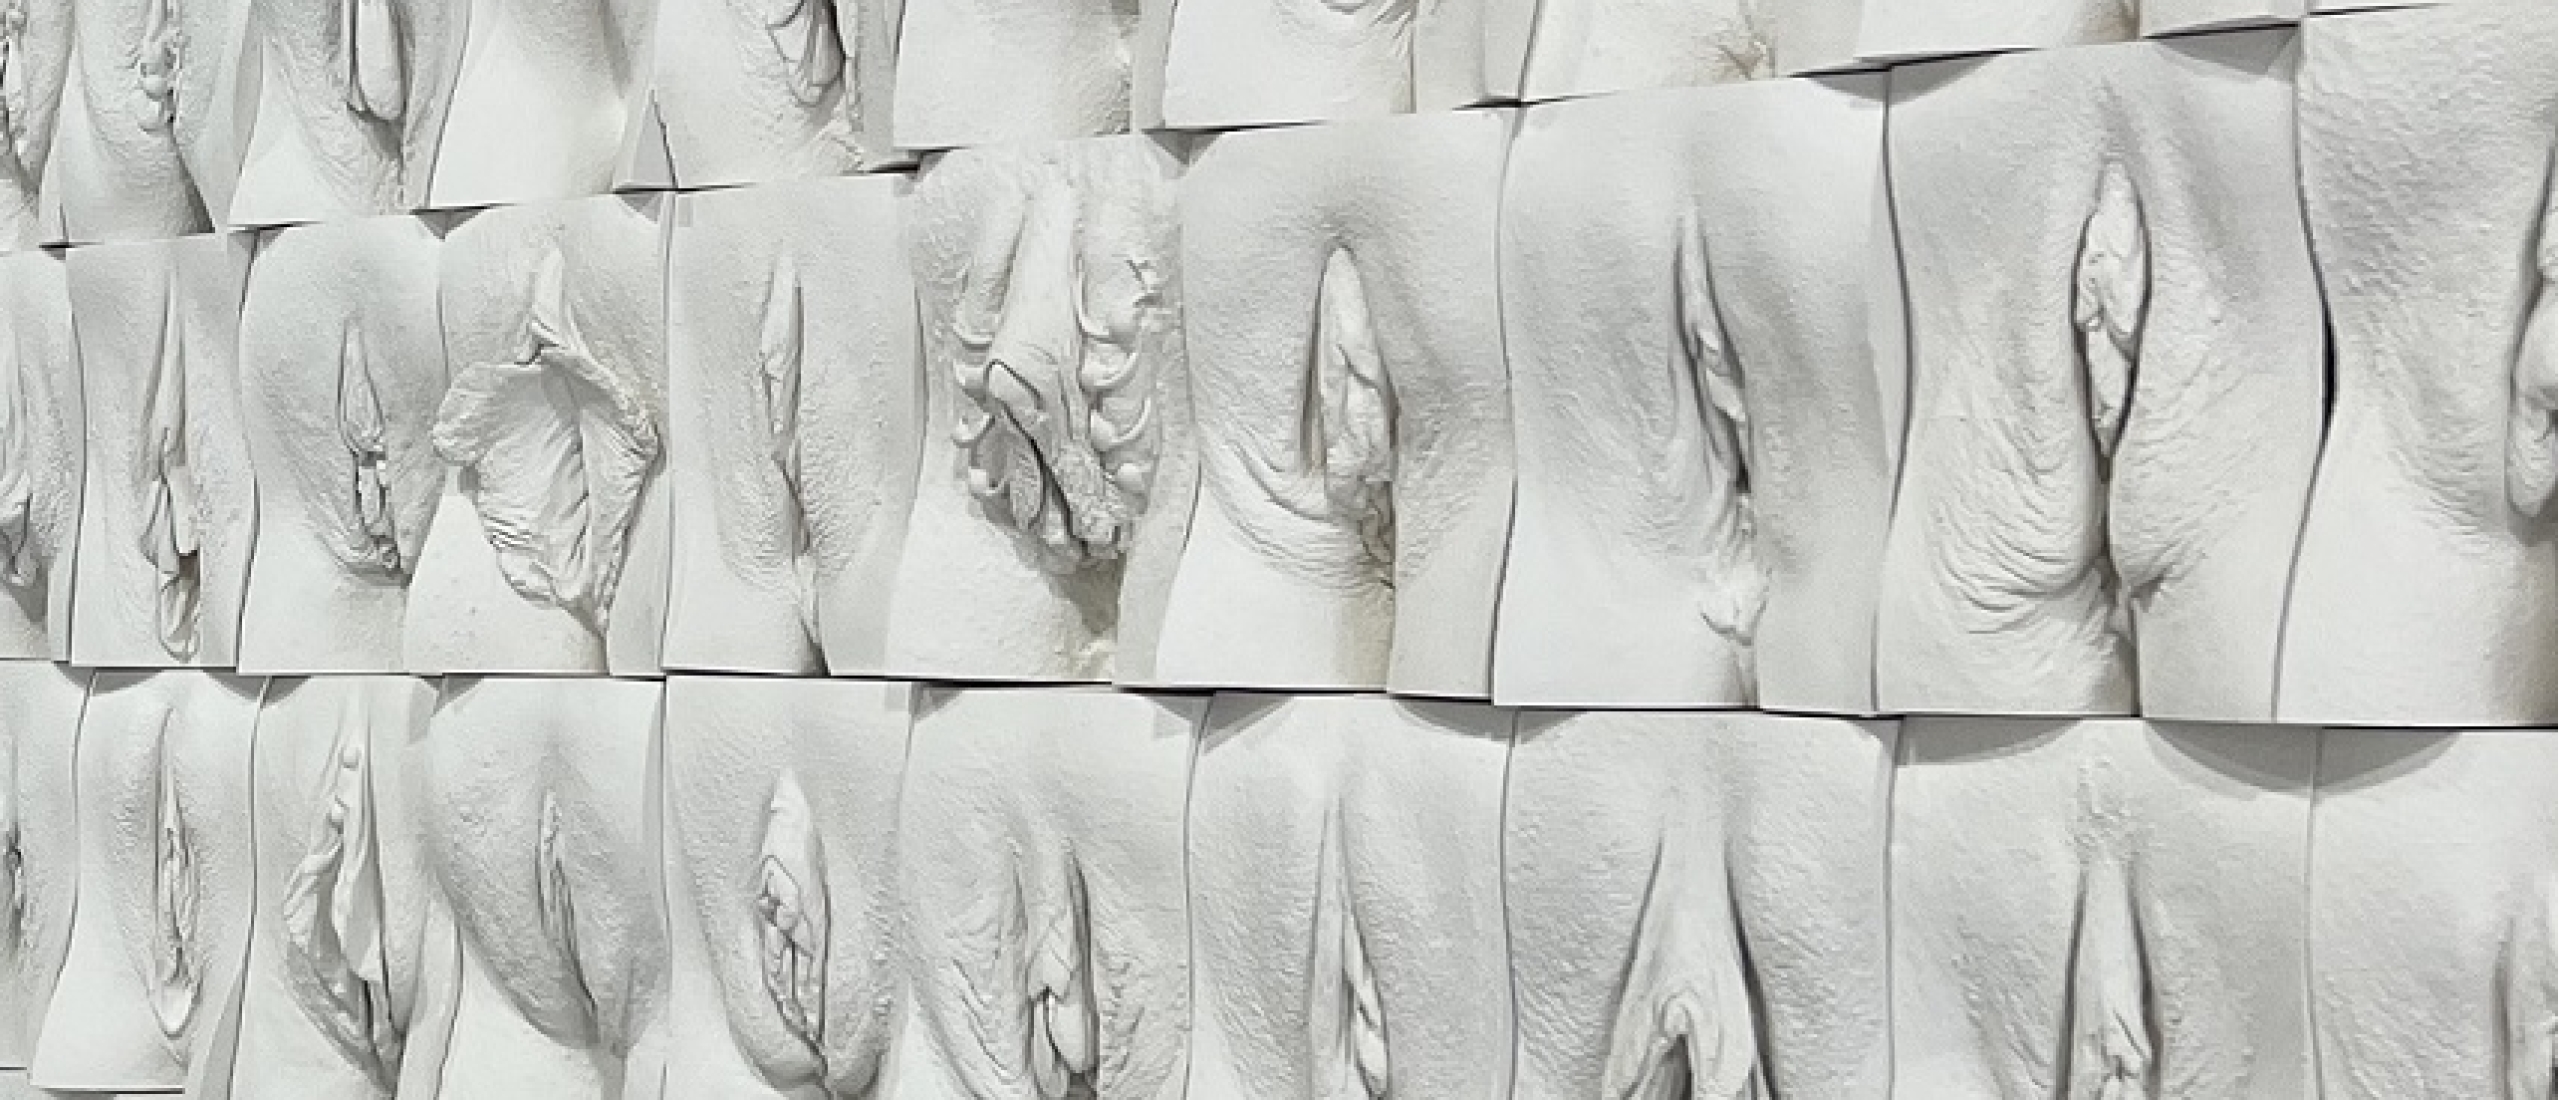 jamie mccartney The Great Wall of Vulva at WEAM detail